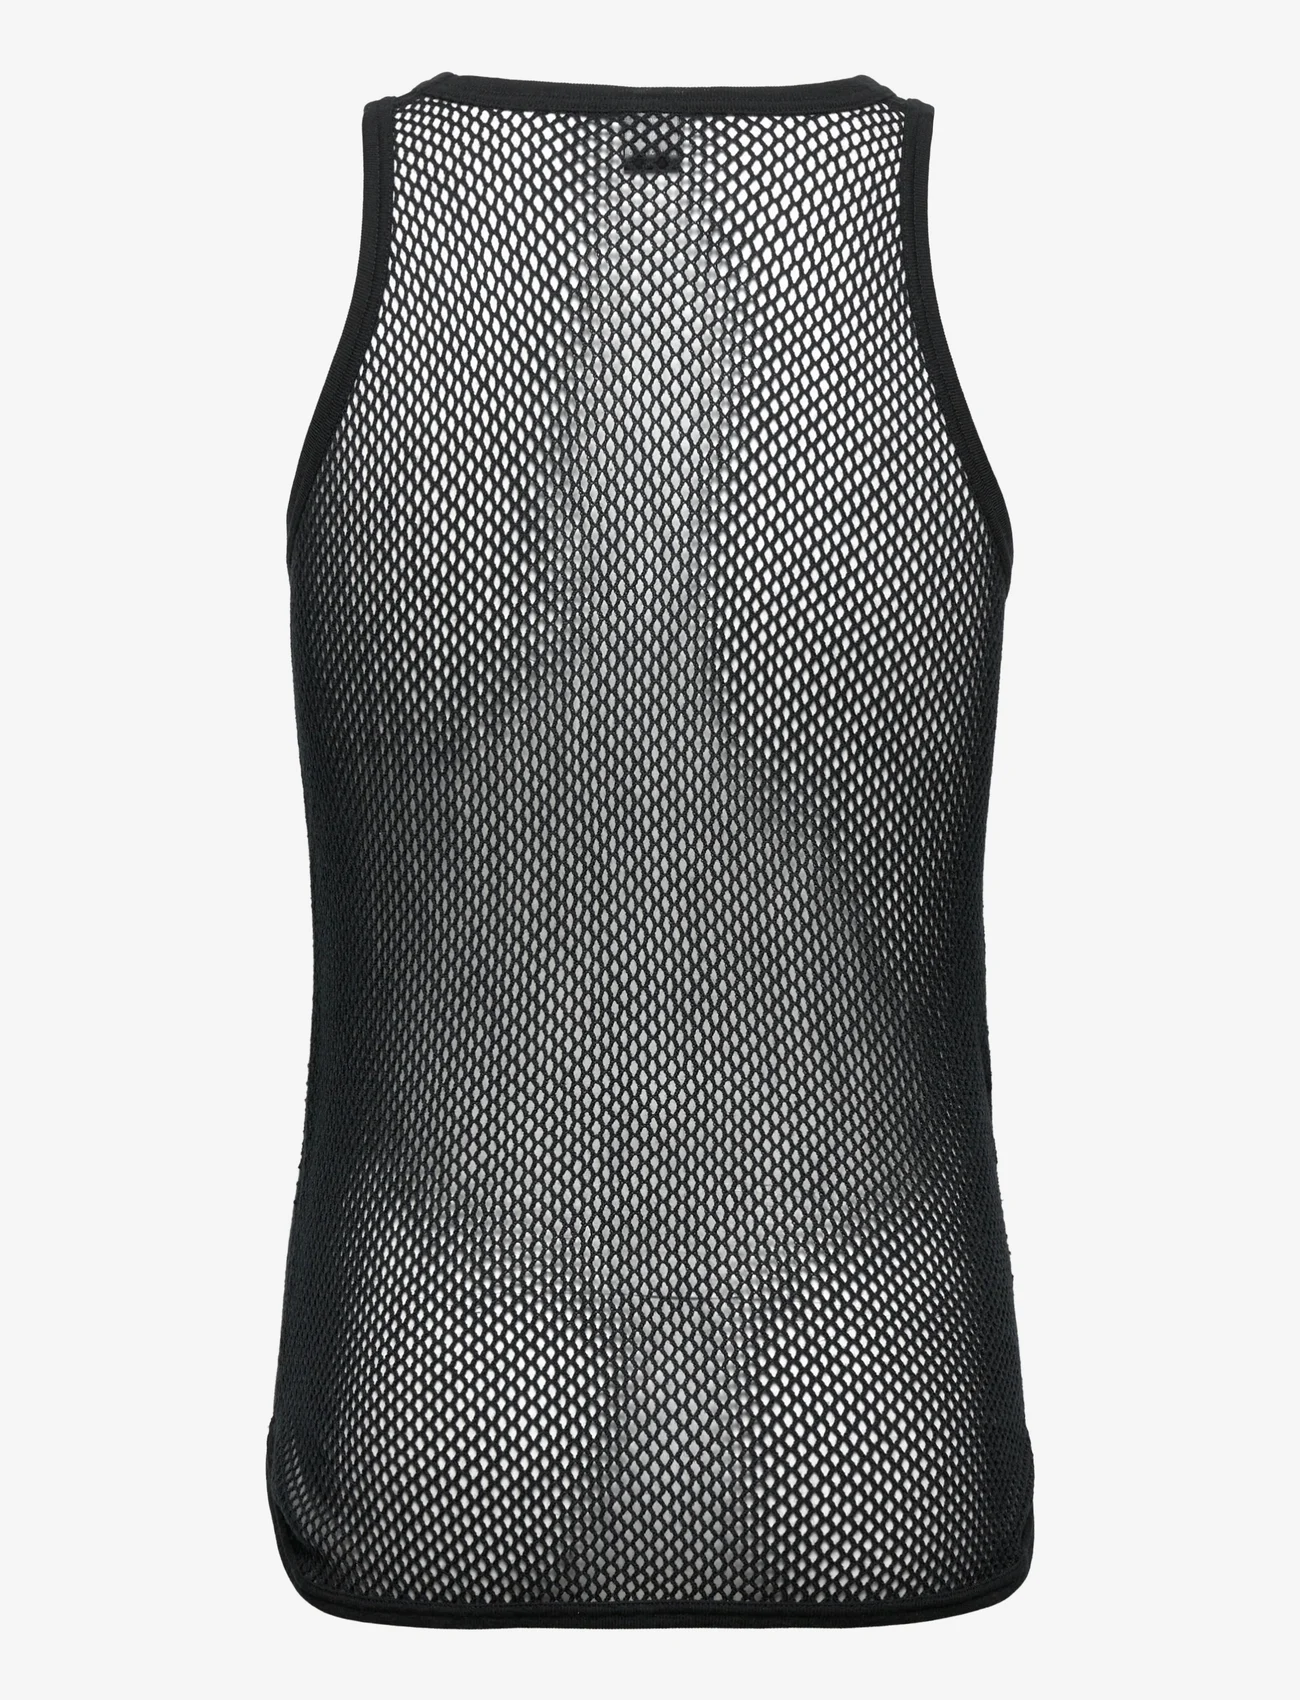 Dovre - DOVRE wool mesh tank top - pyjamashirts - black - 1